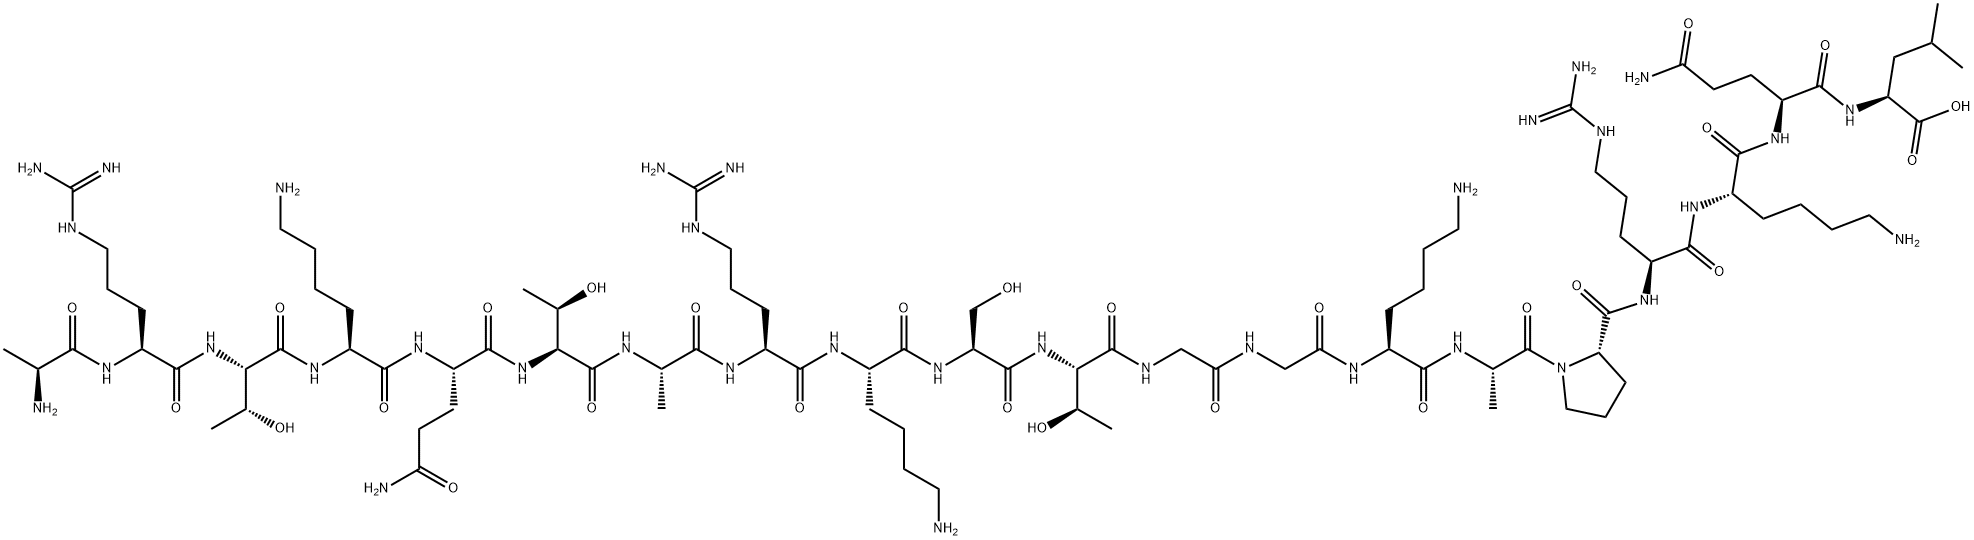 Histone H3 (1-20) Struktur